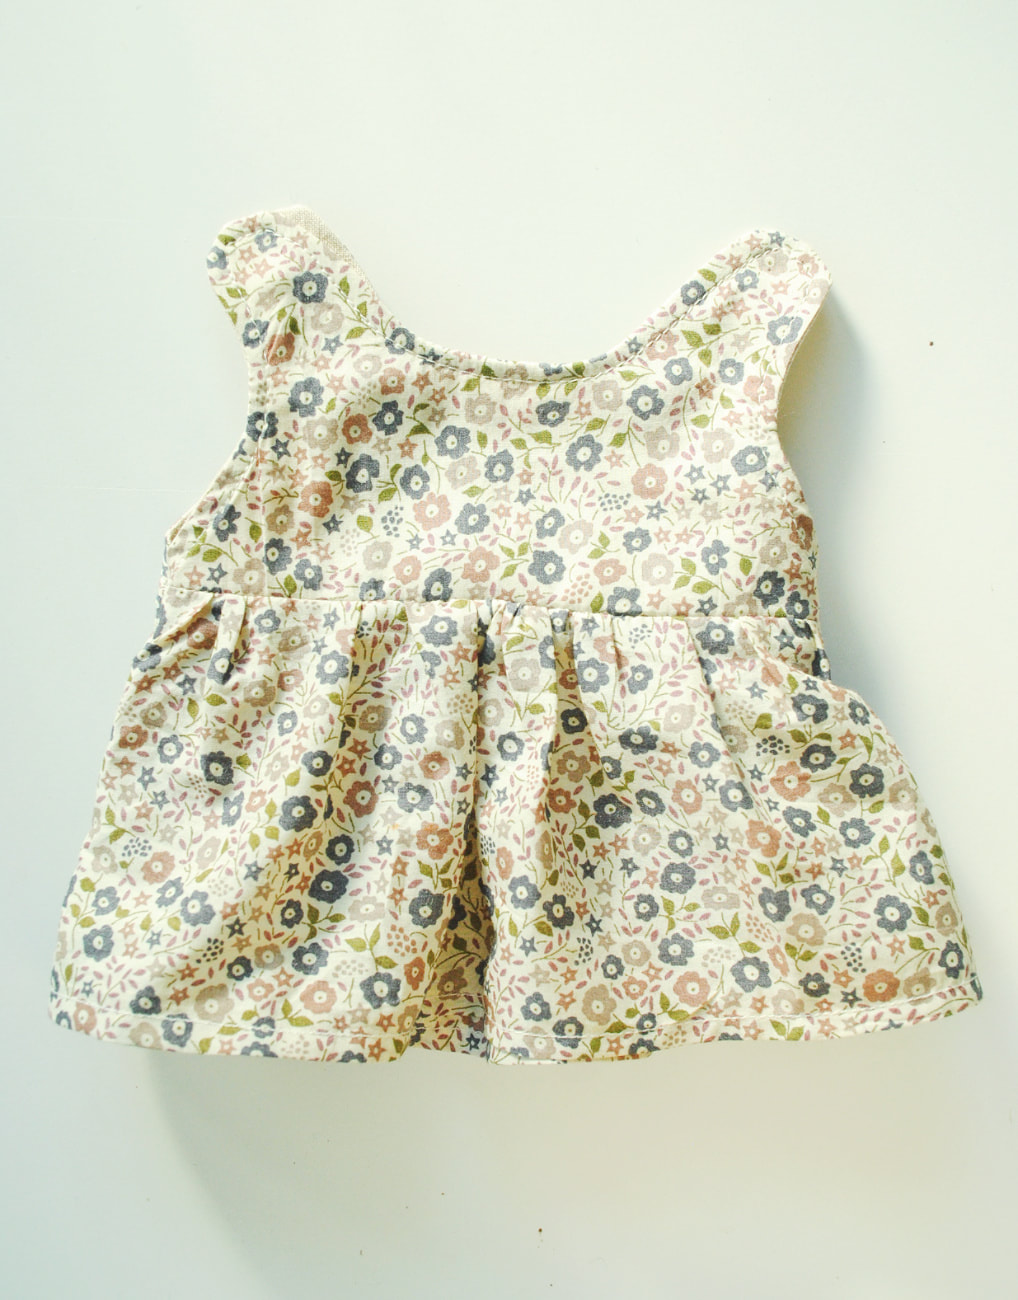 Digital sewing pattern for 3 doll dresses by Willowynn